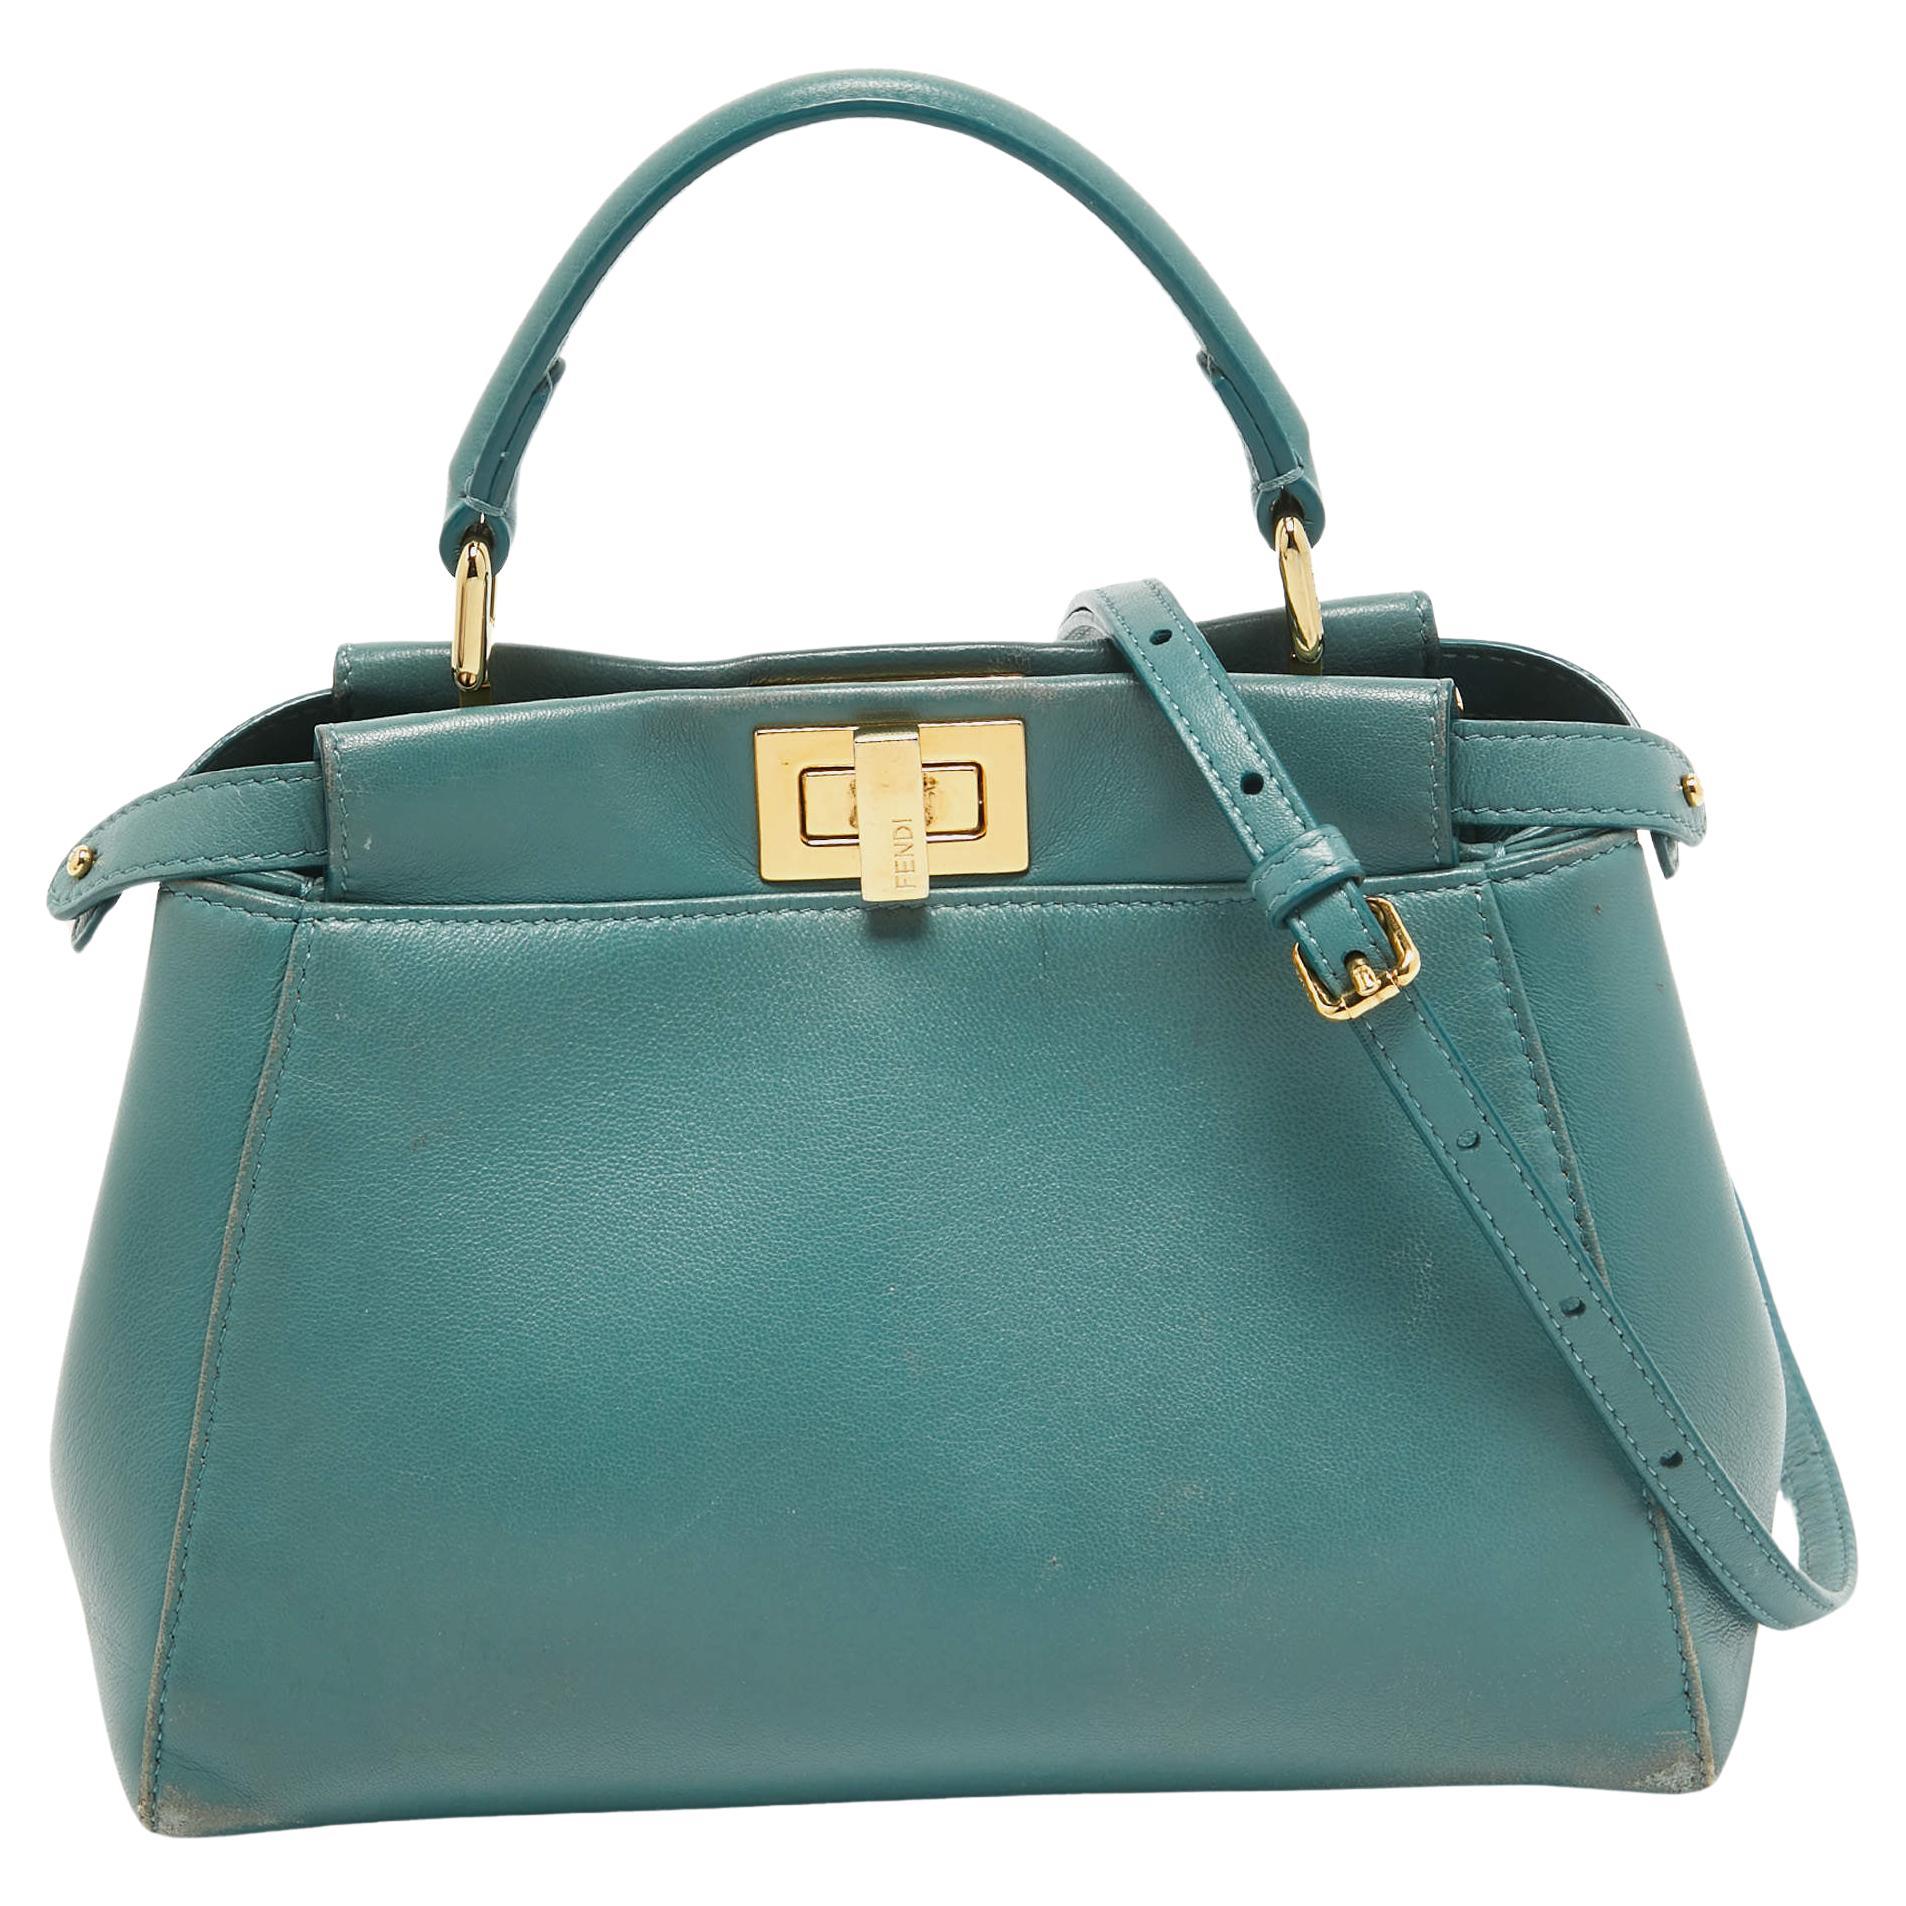 Fendi Teal Blue Leather Mini Peekaboo Top Handle Bag For Sale